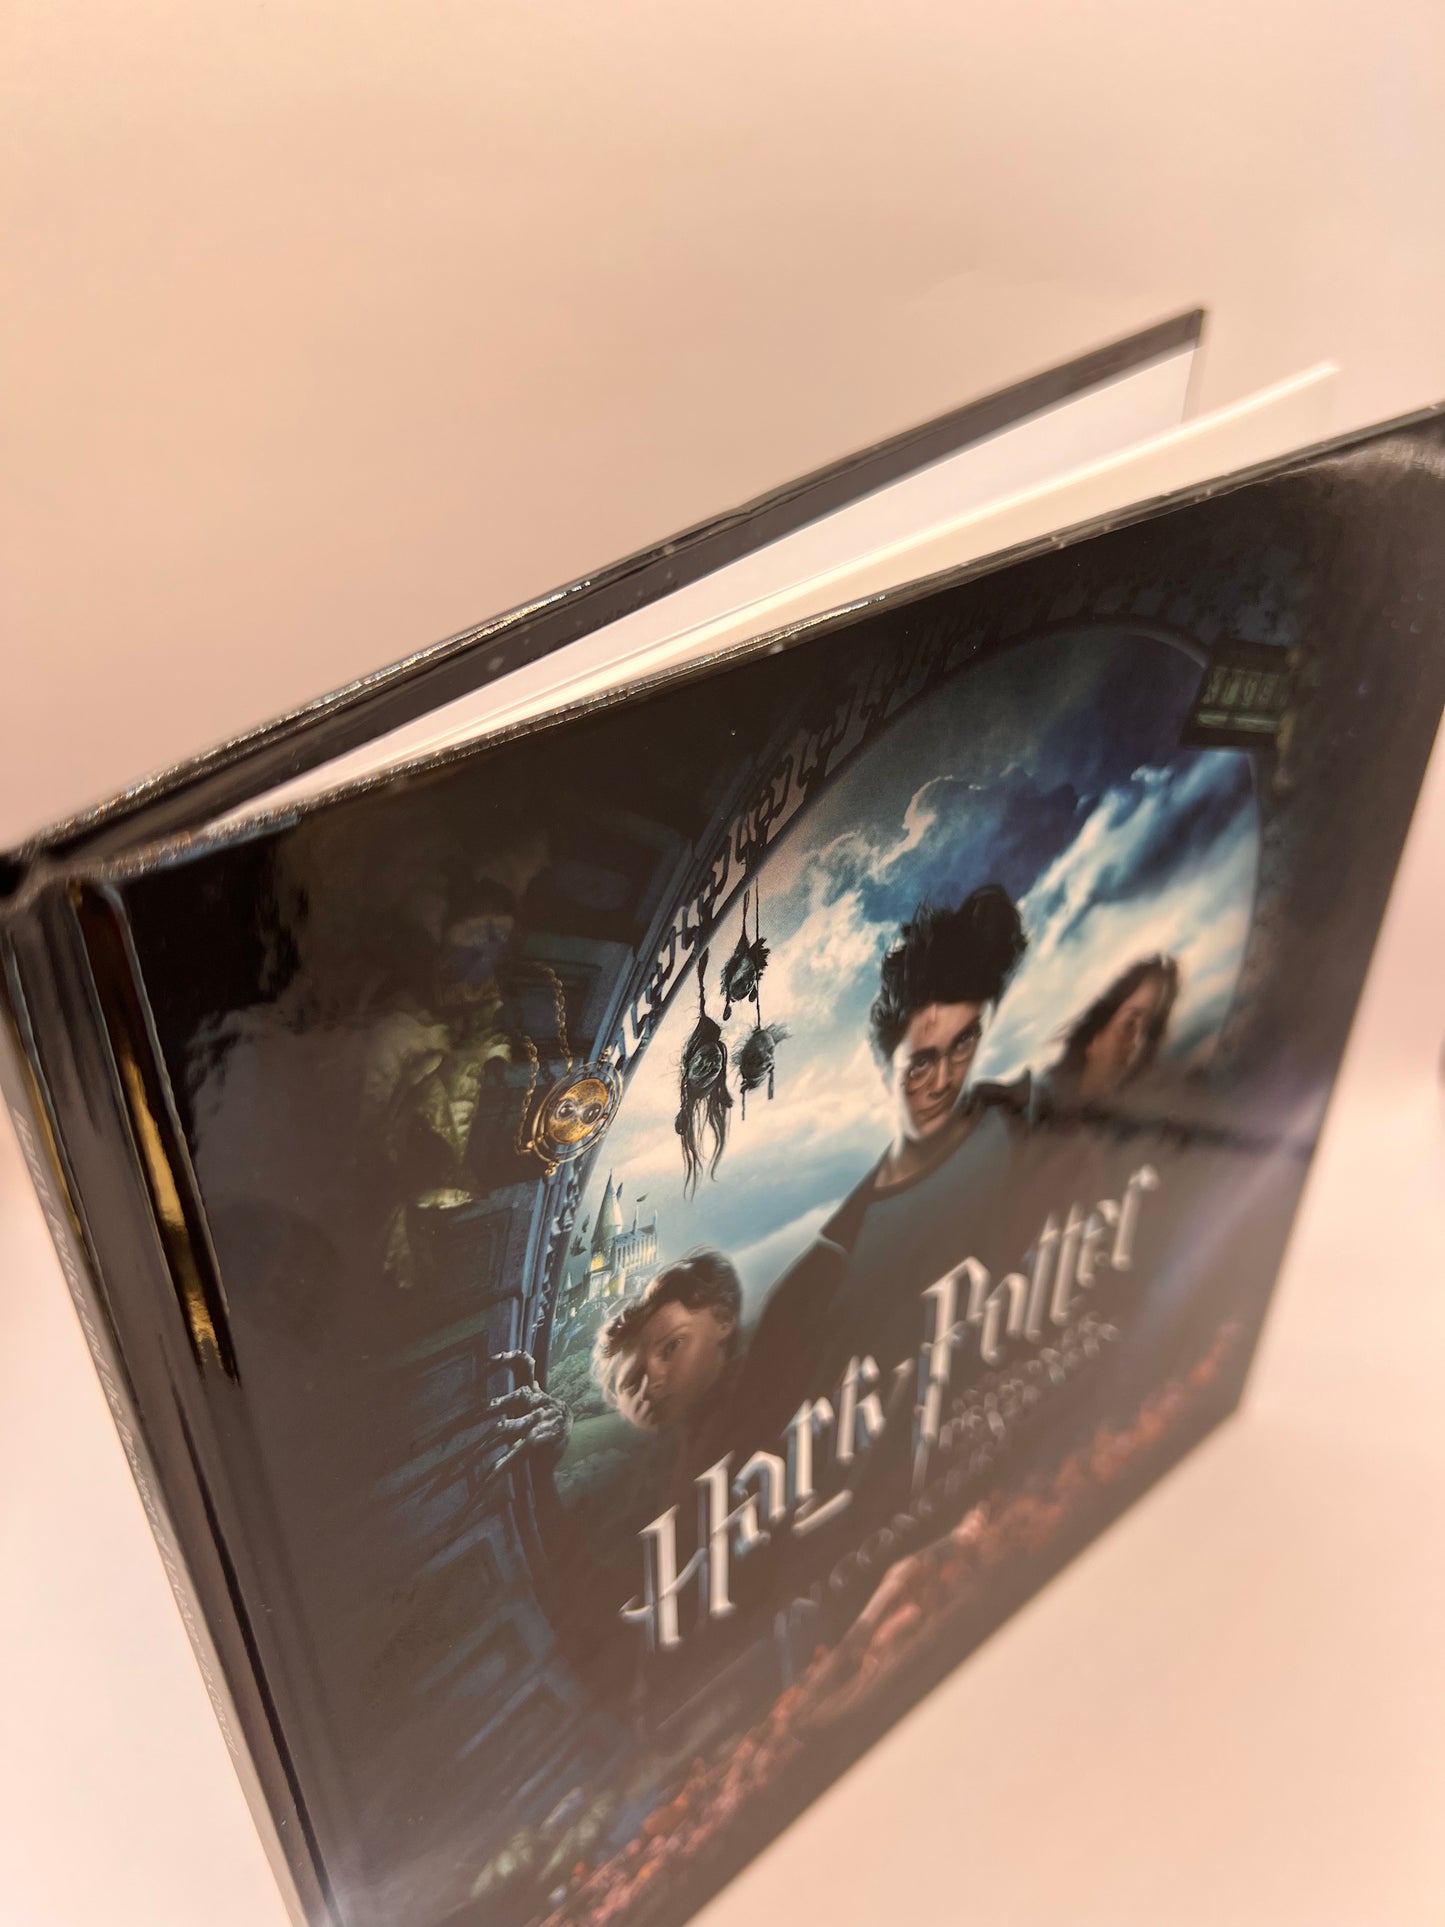 Harry Potter and the Prisoner of Azkaban™ in Concert Hardcover Program Book